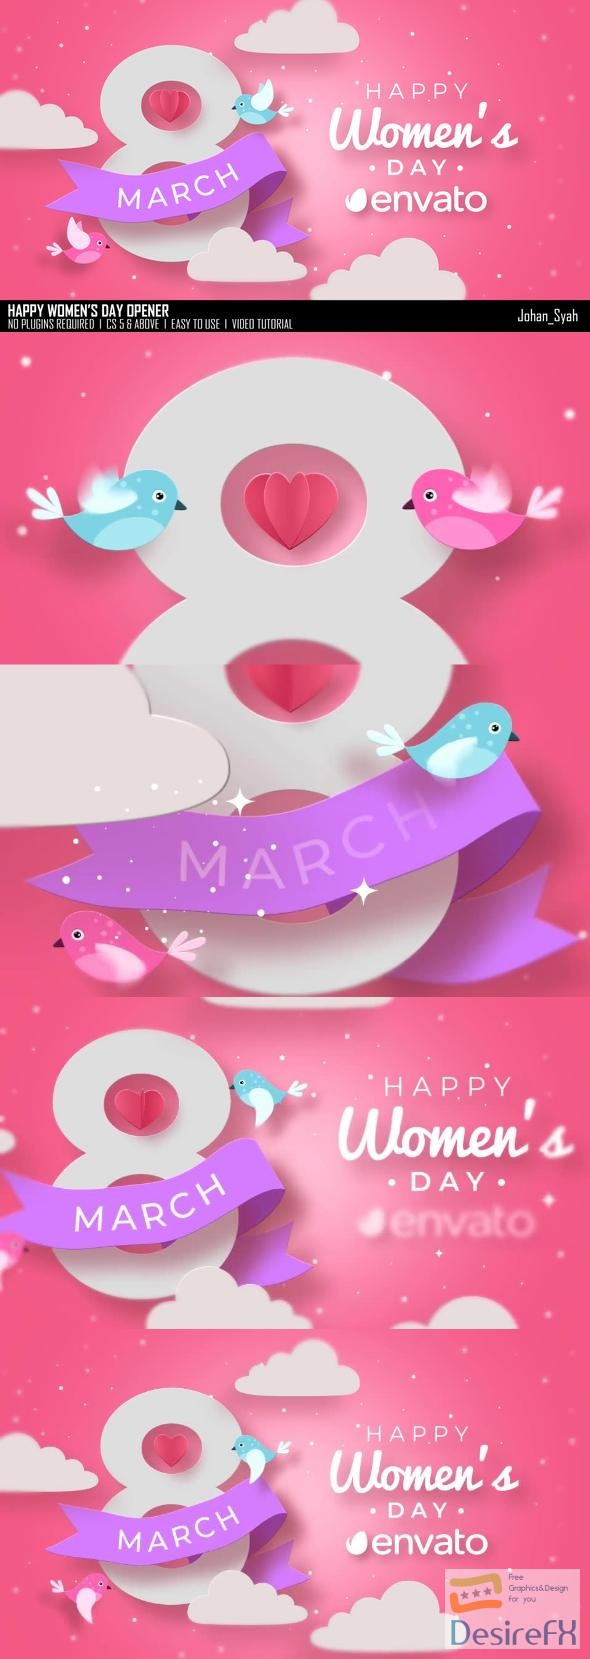 Download VideoHive Happy Women’s Day Opener 50868638 - DesireFX.COM